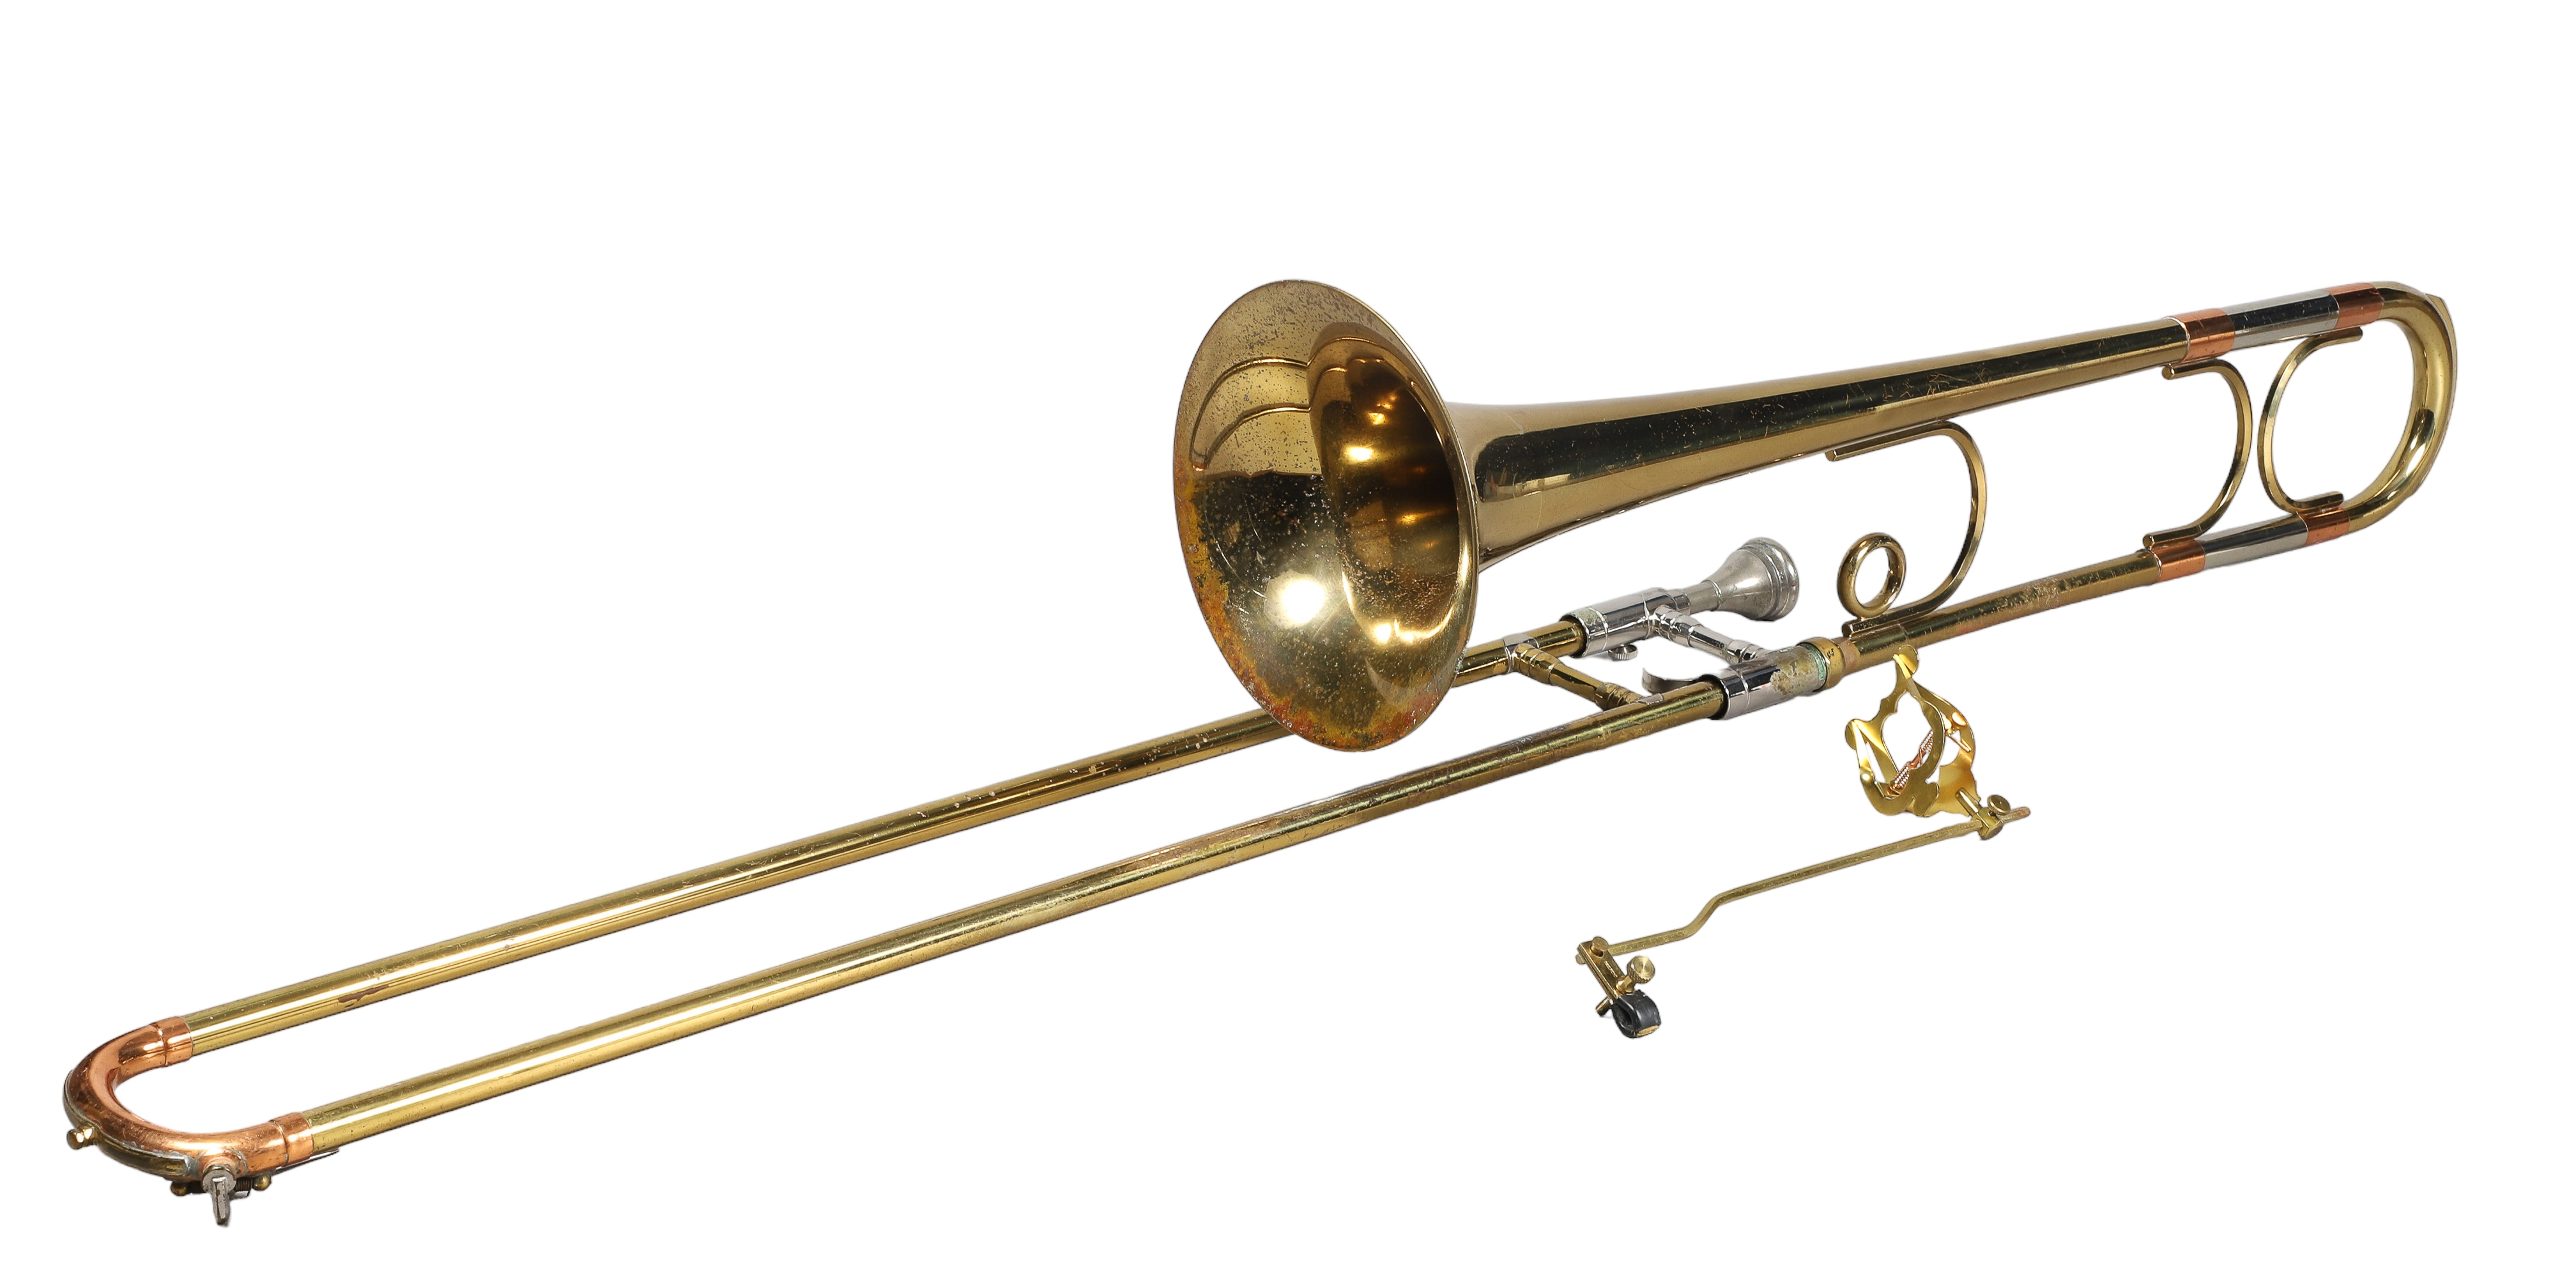 Getzen Super Deluxe trombone brass 2e1ad7